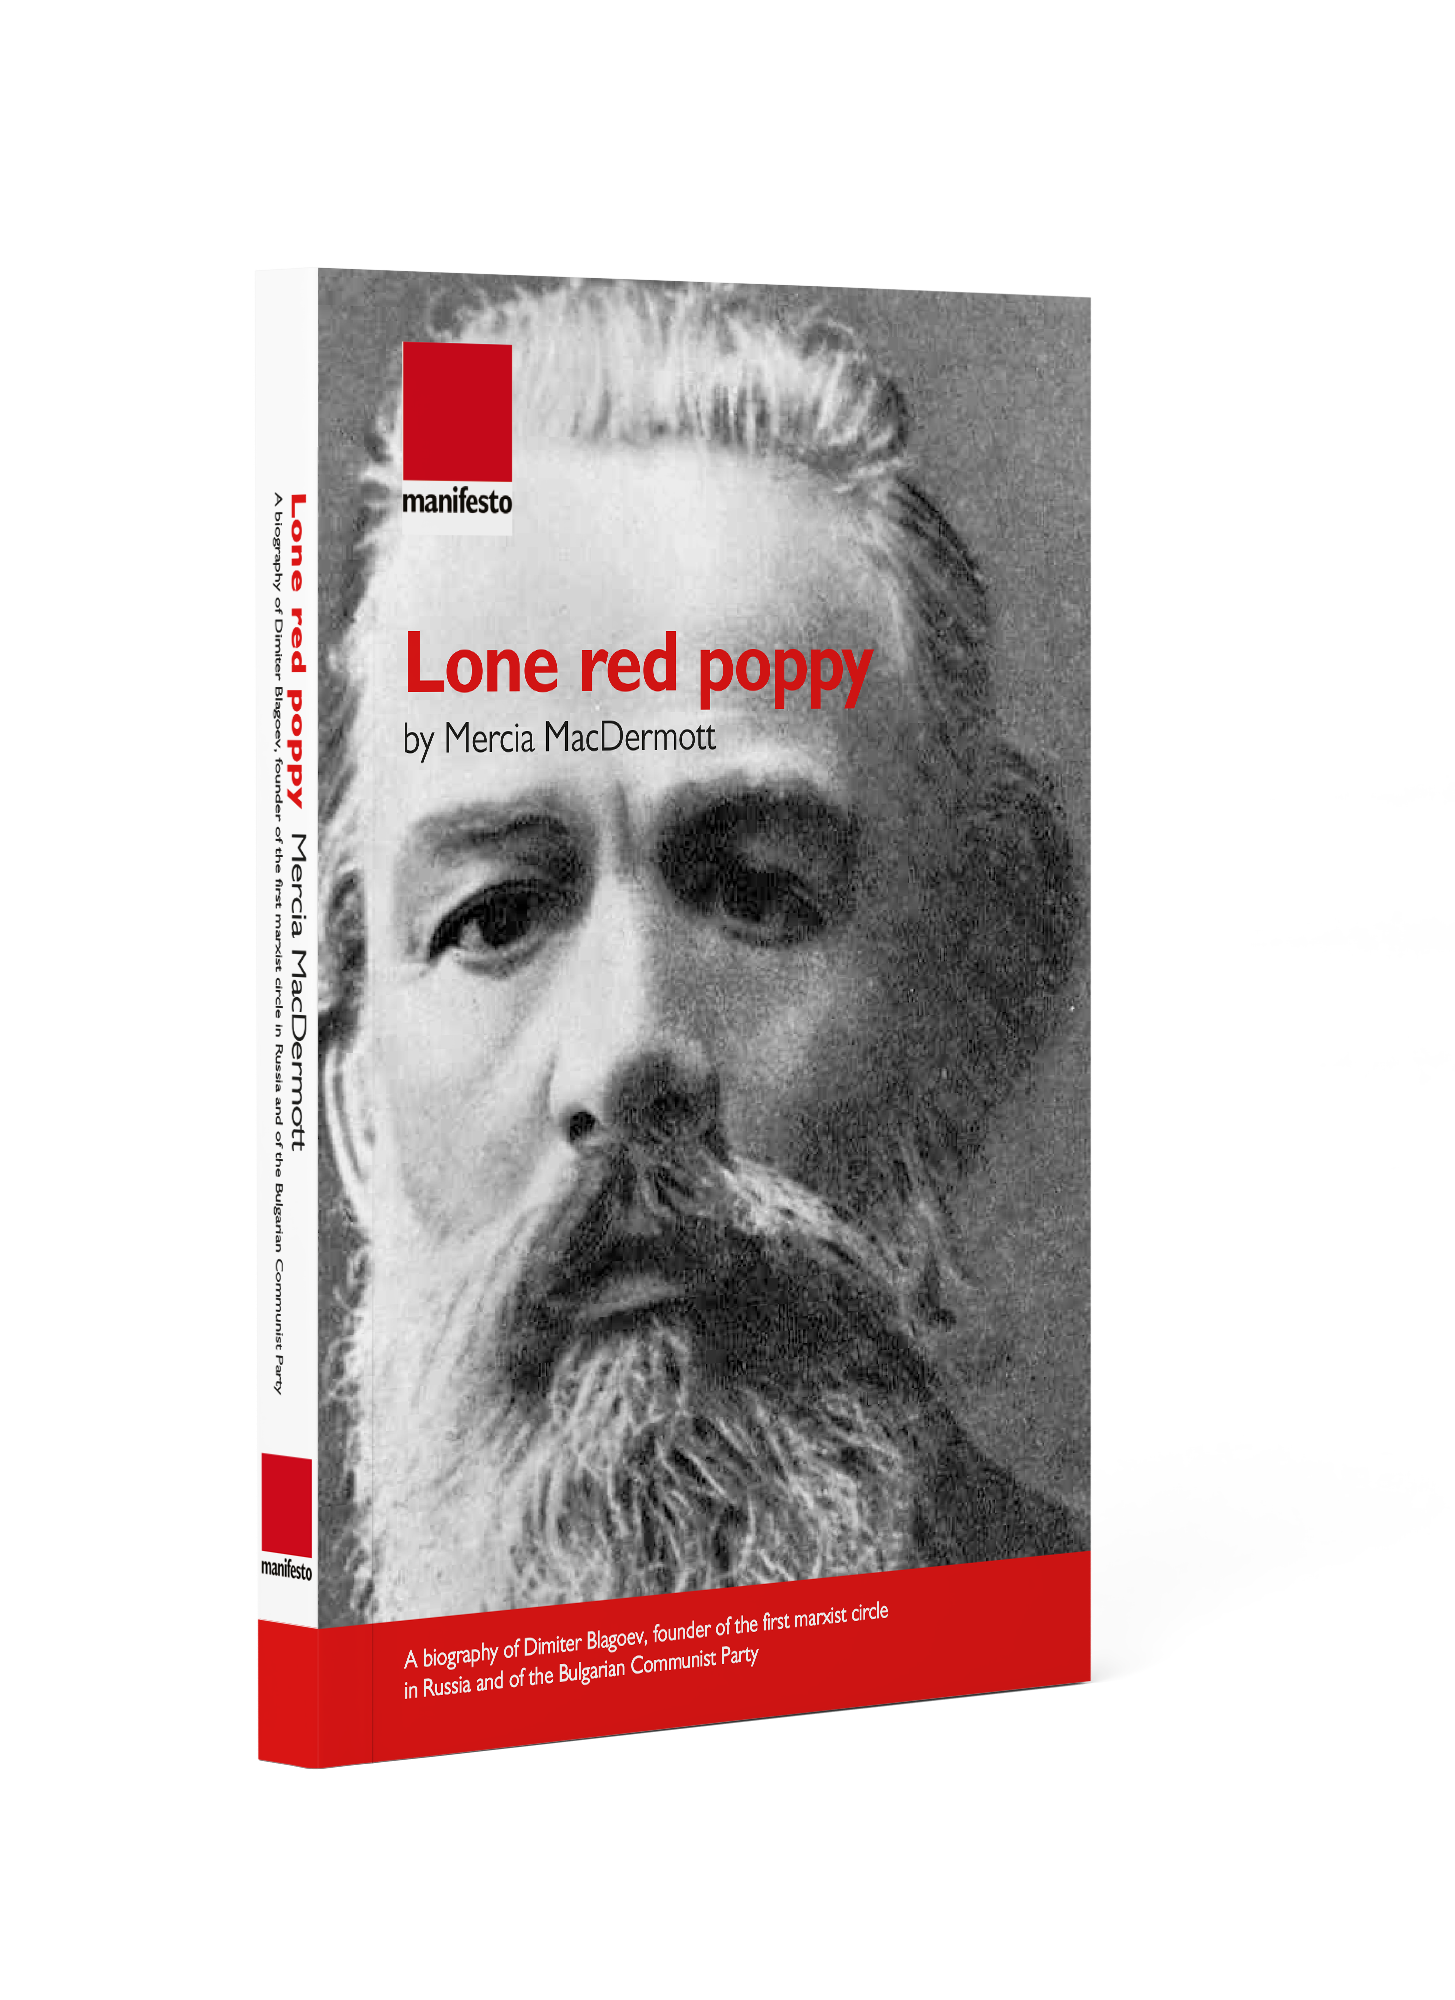 Lone red poppy  A biography of Dimiter Blagoev